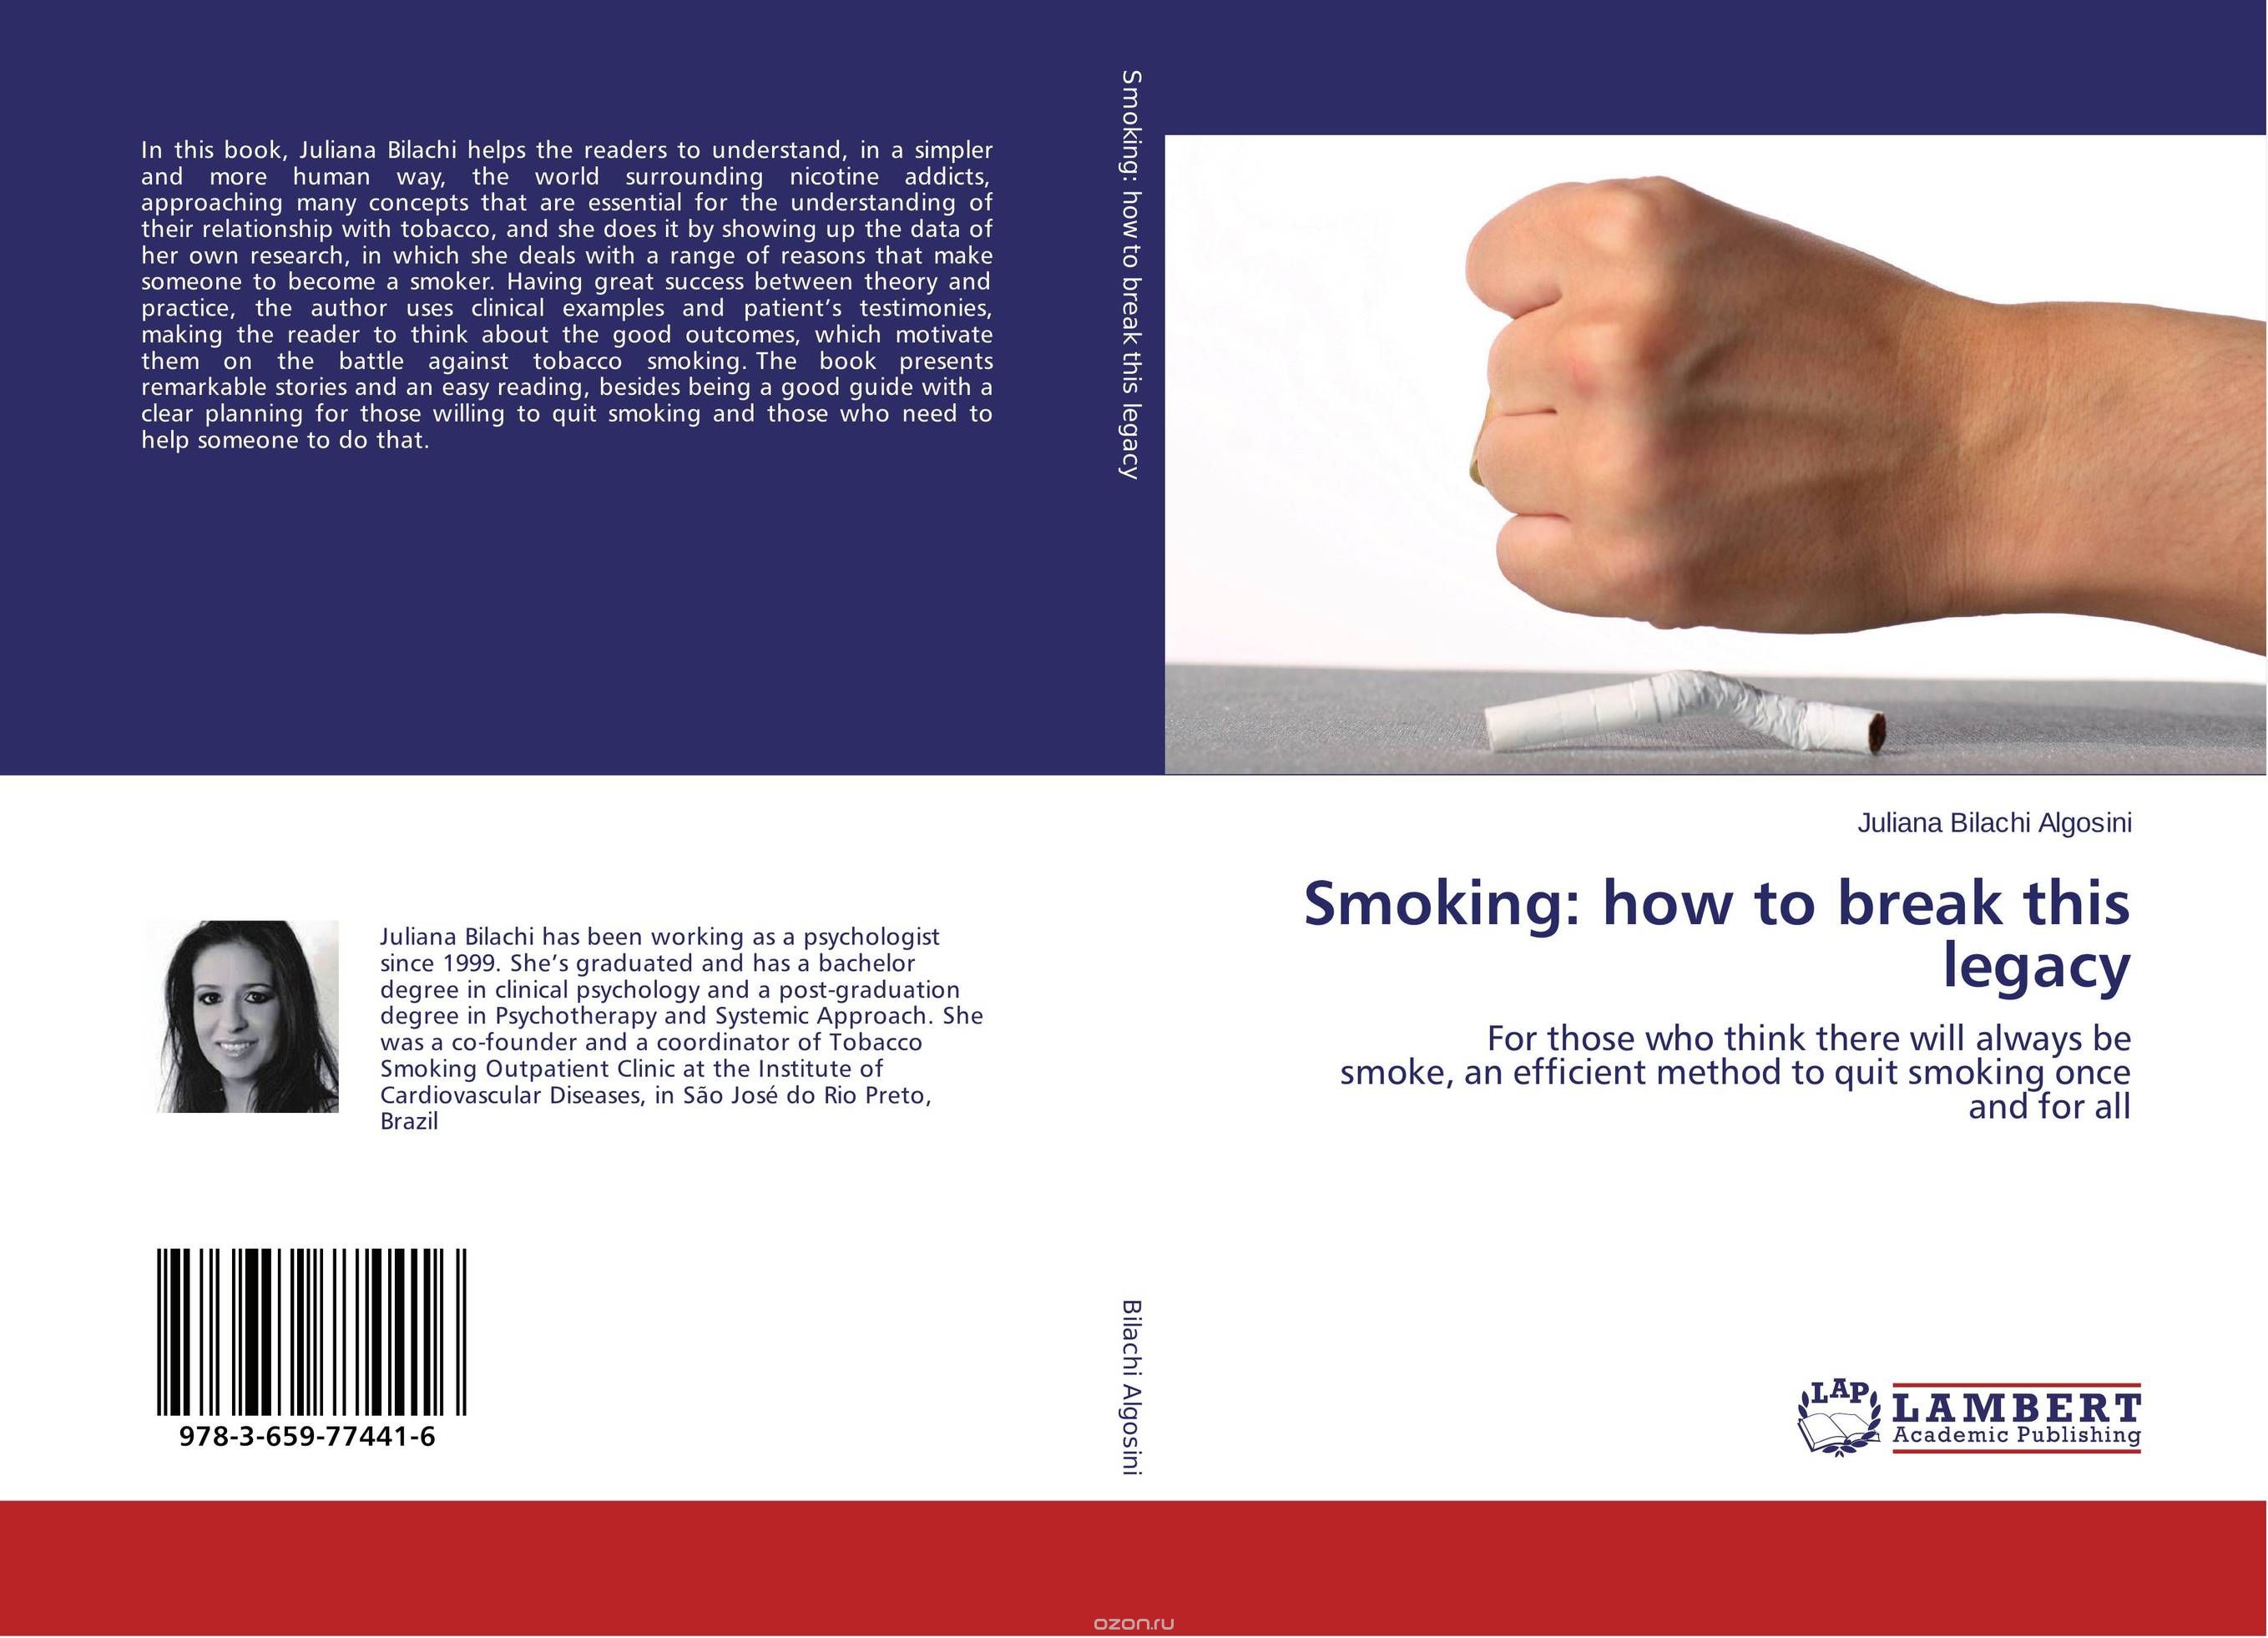 Скачать книгу "Smoking: how to break this legacy"